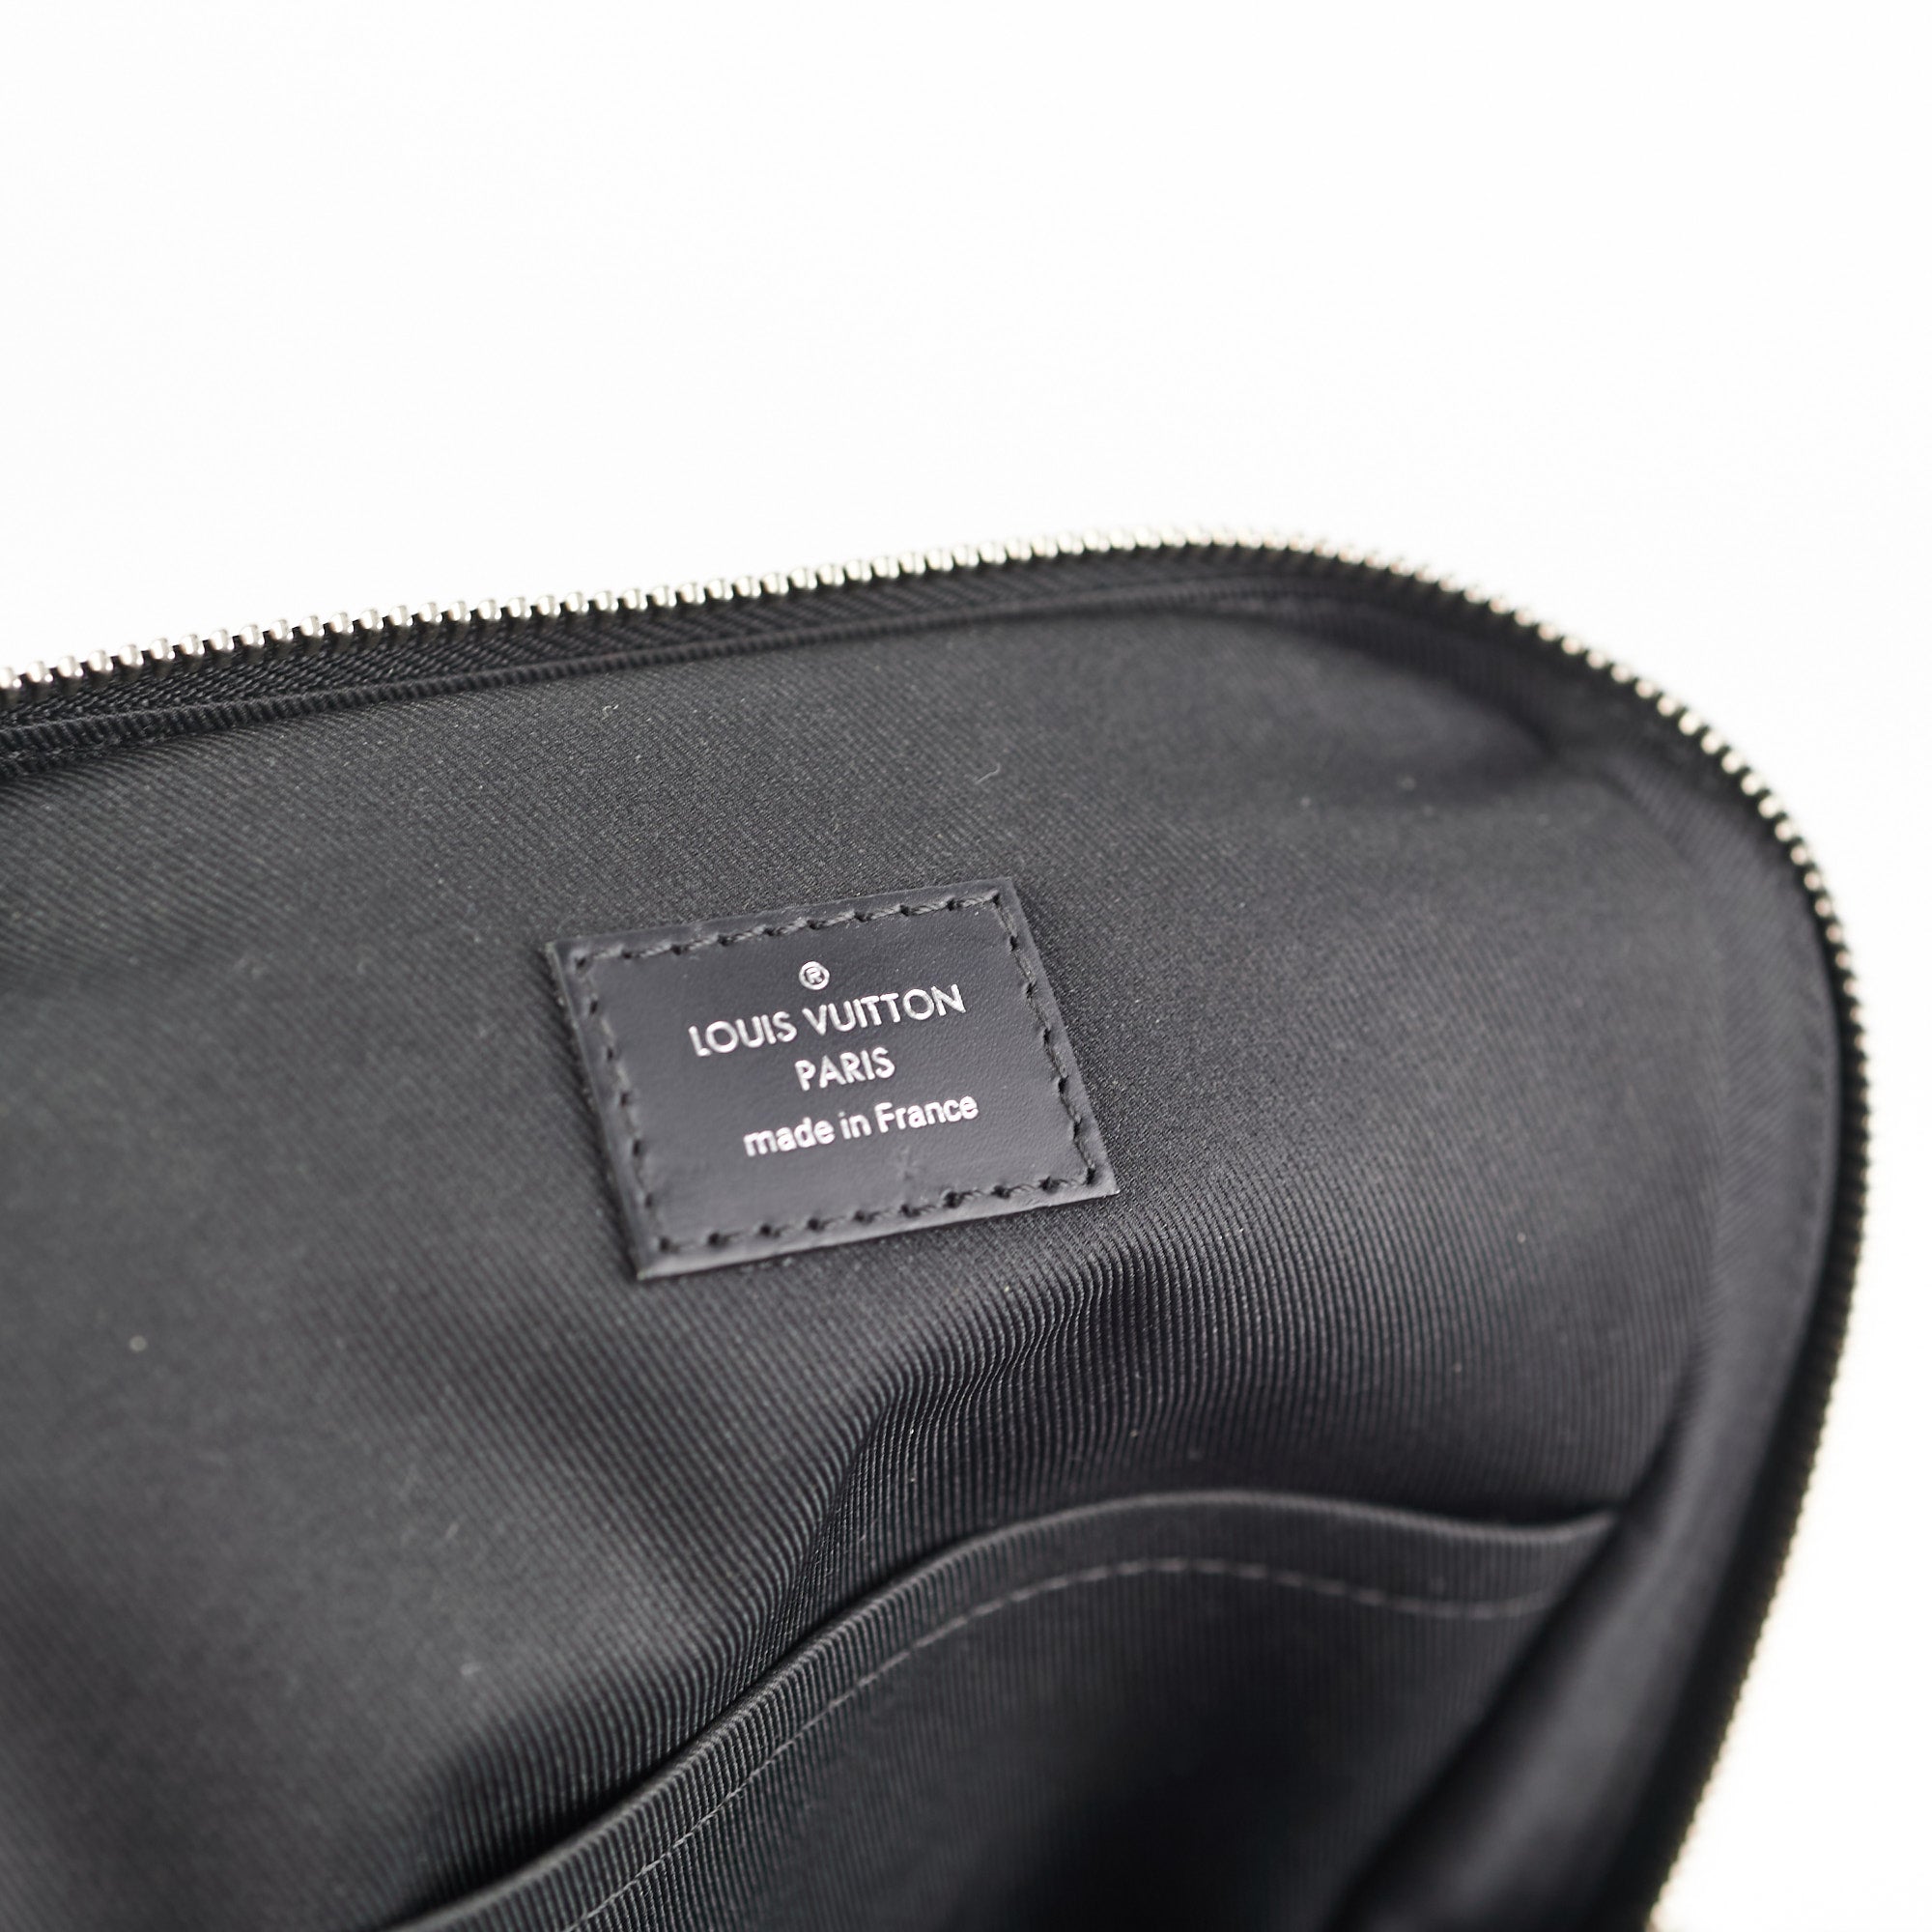 Authentic Louis Vuitton Monogram Keepall 60 handtravel bag  Connect Japan  Luxury